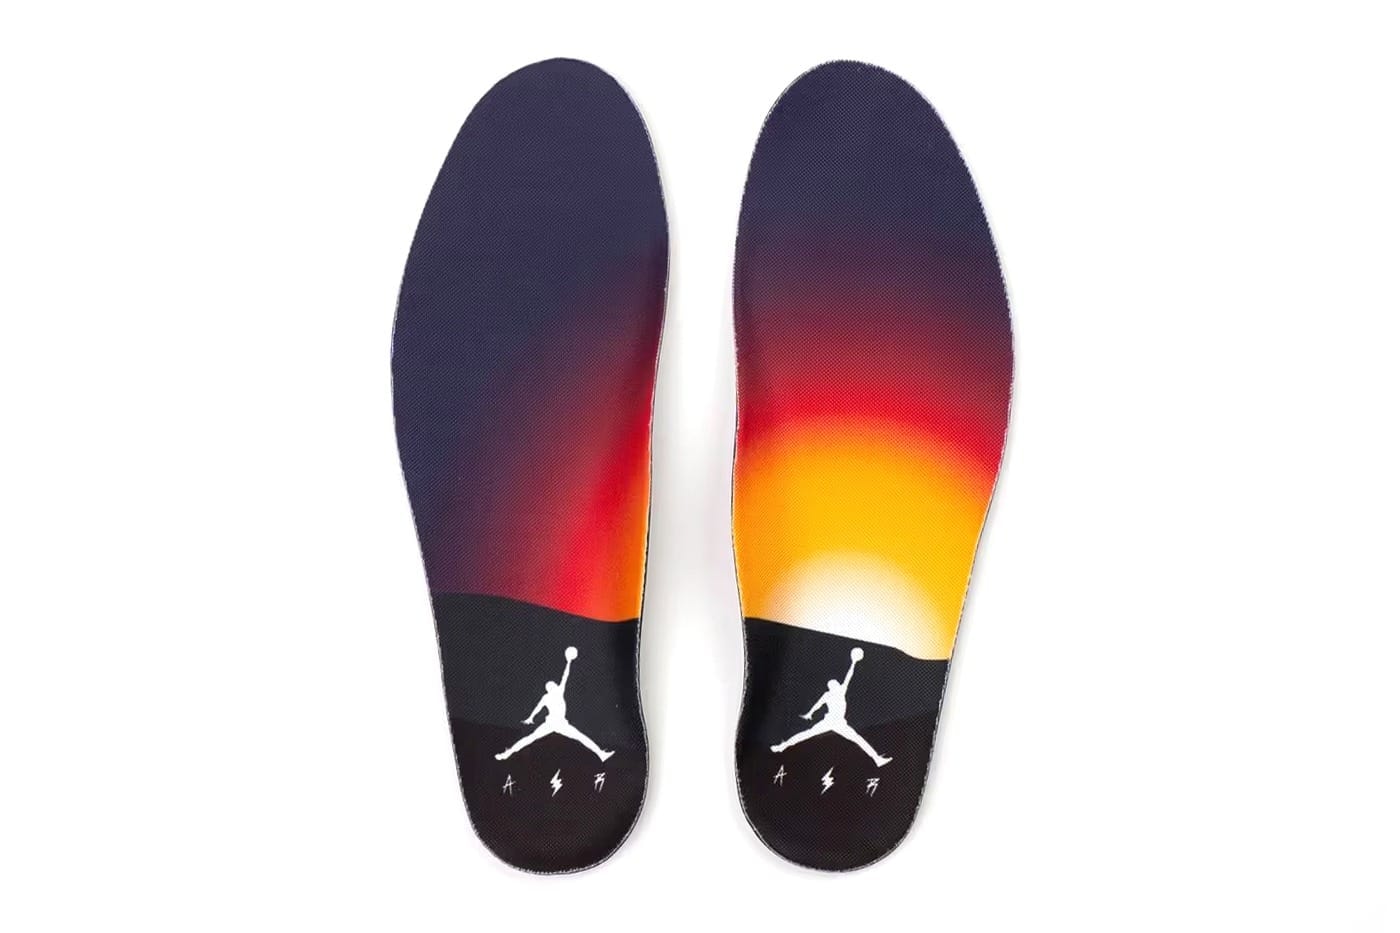  J Balvin x Air Jordan 3 发布全新配色「Rio」